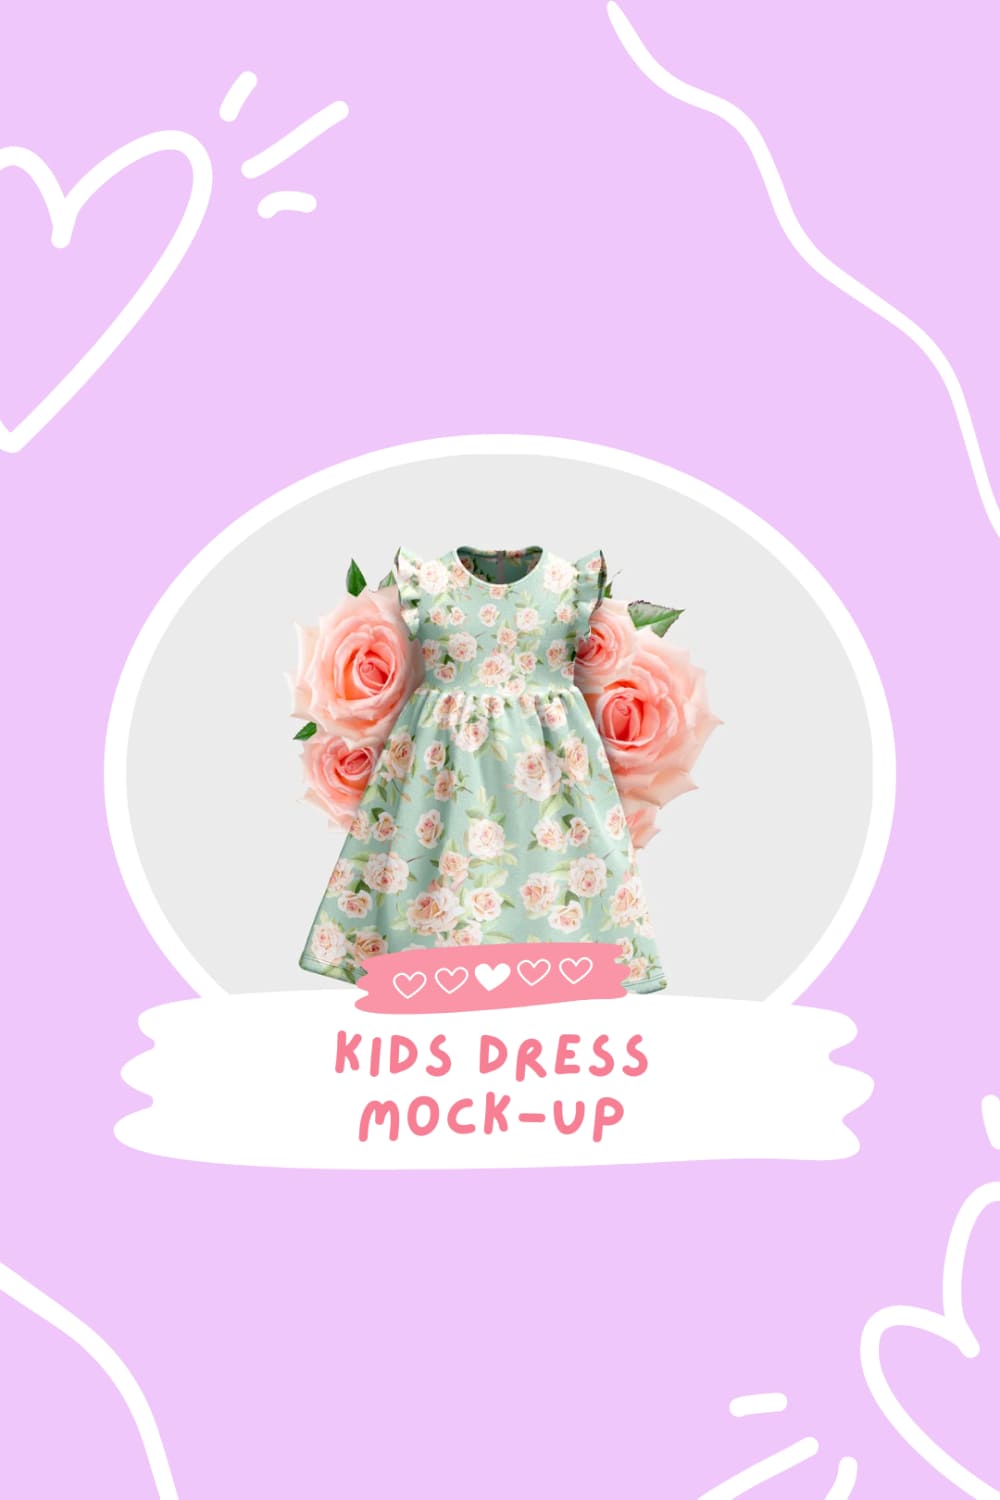 Kids Dress Mockup - pinterest image preview.